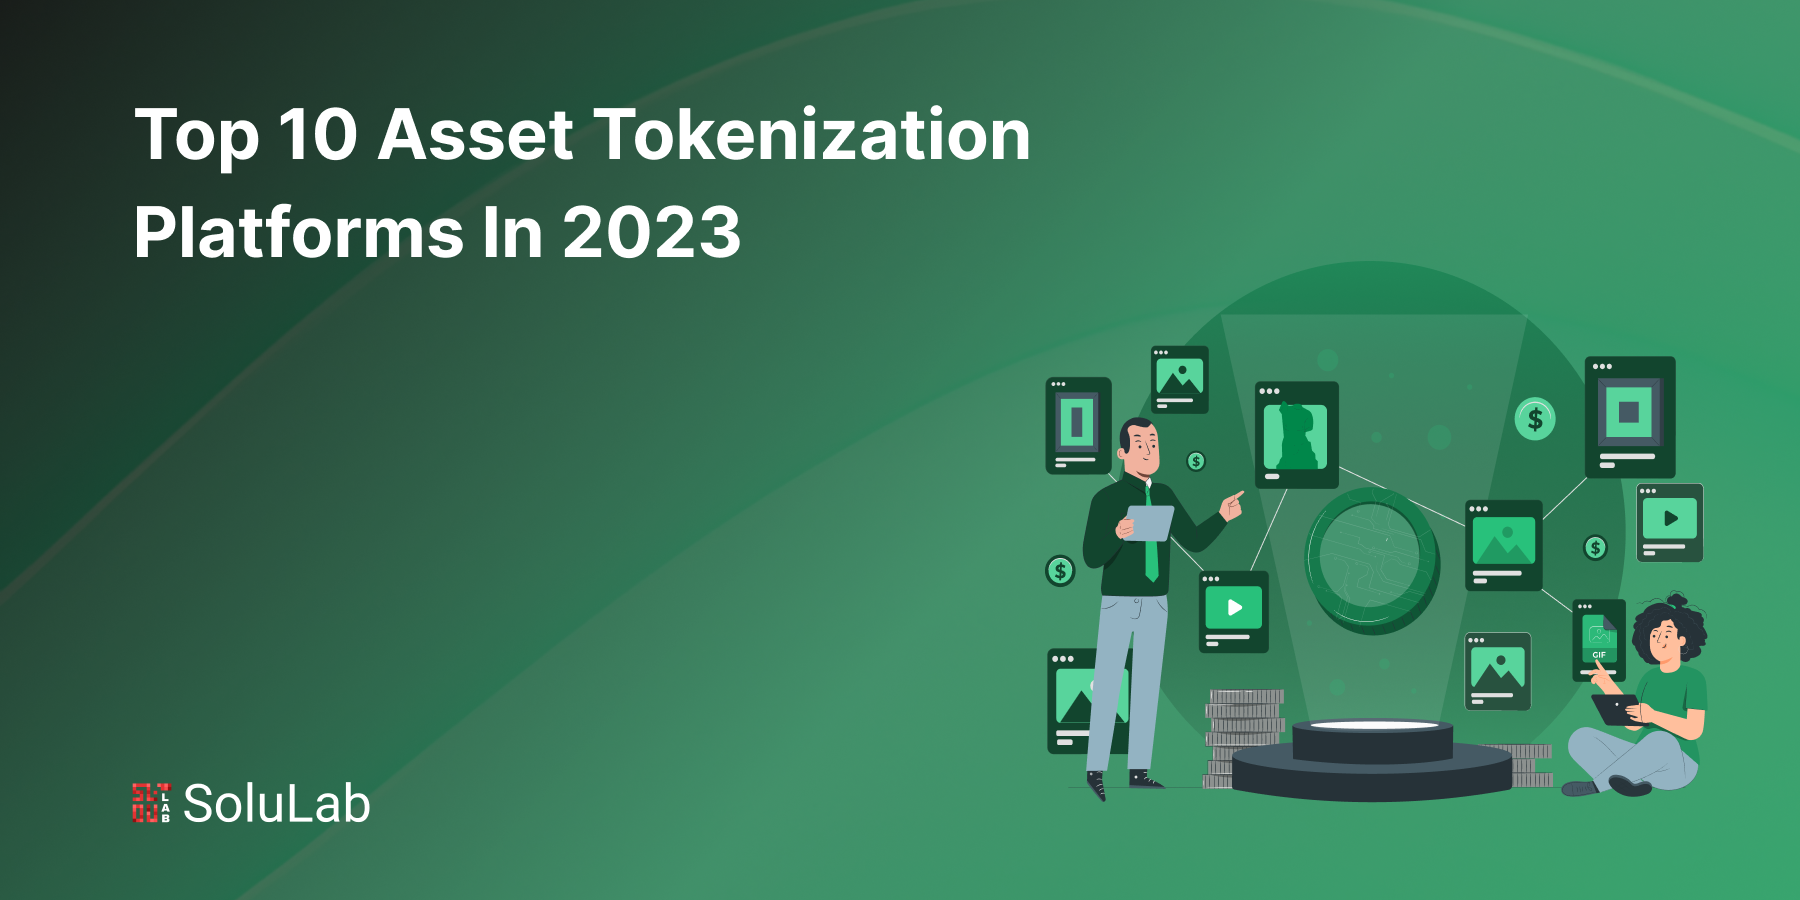 Top 10 Asset Tokenization Platforms in 2023